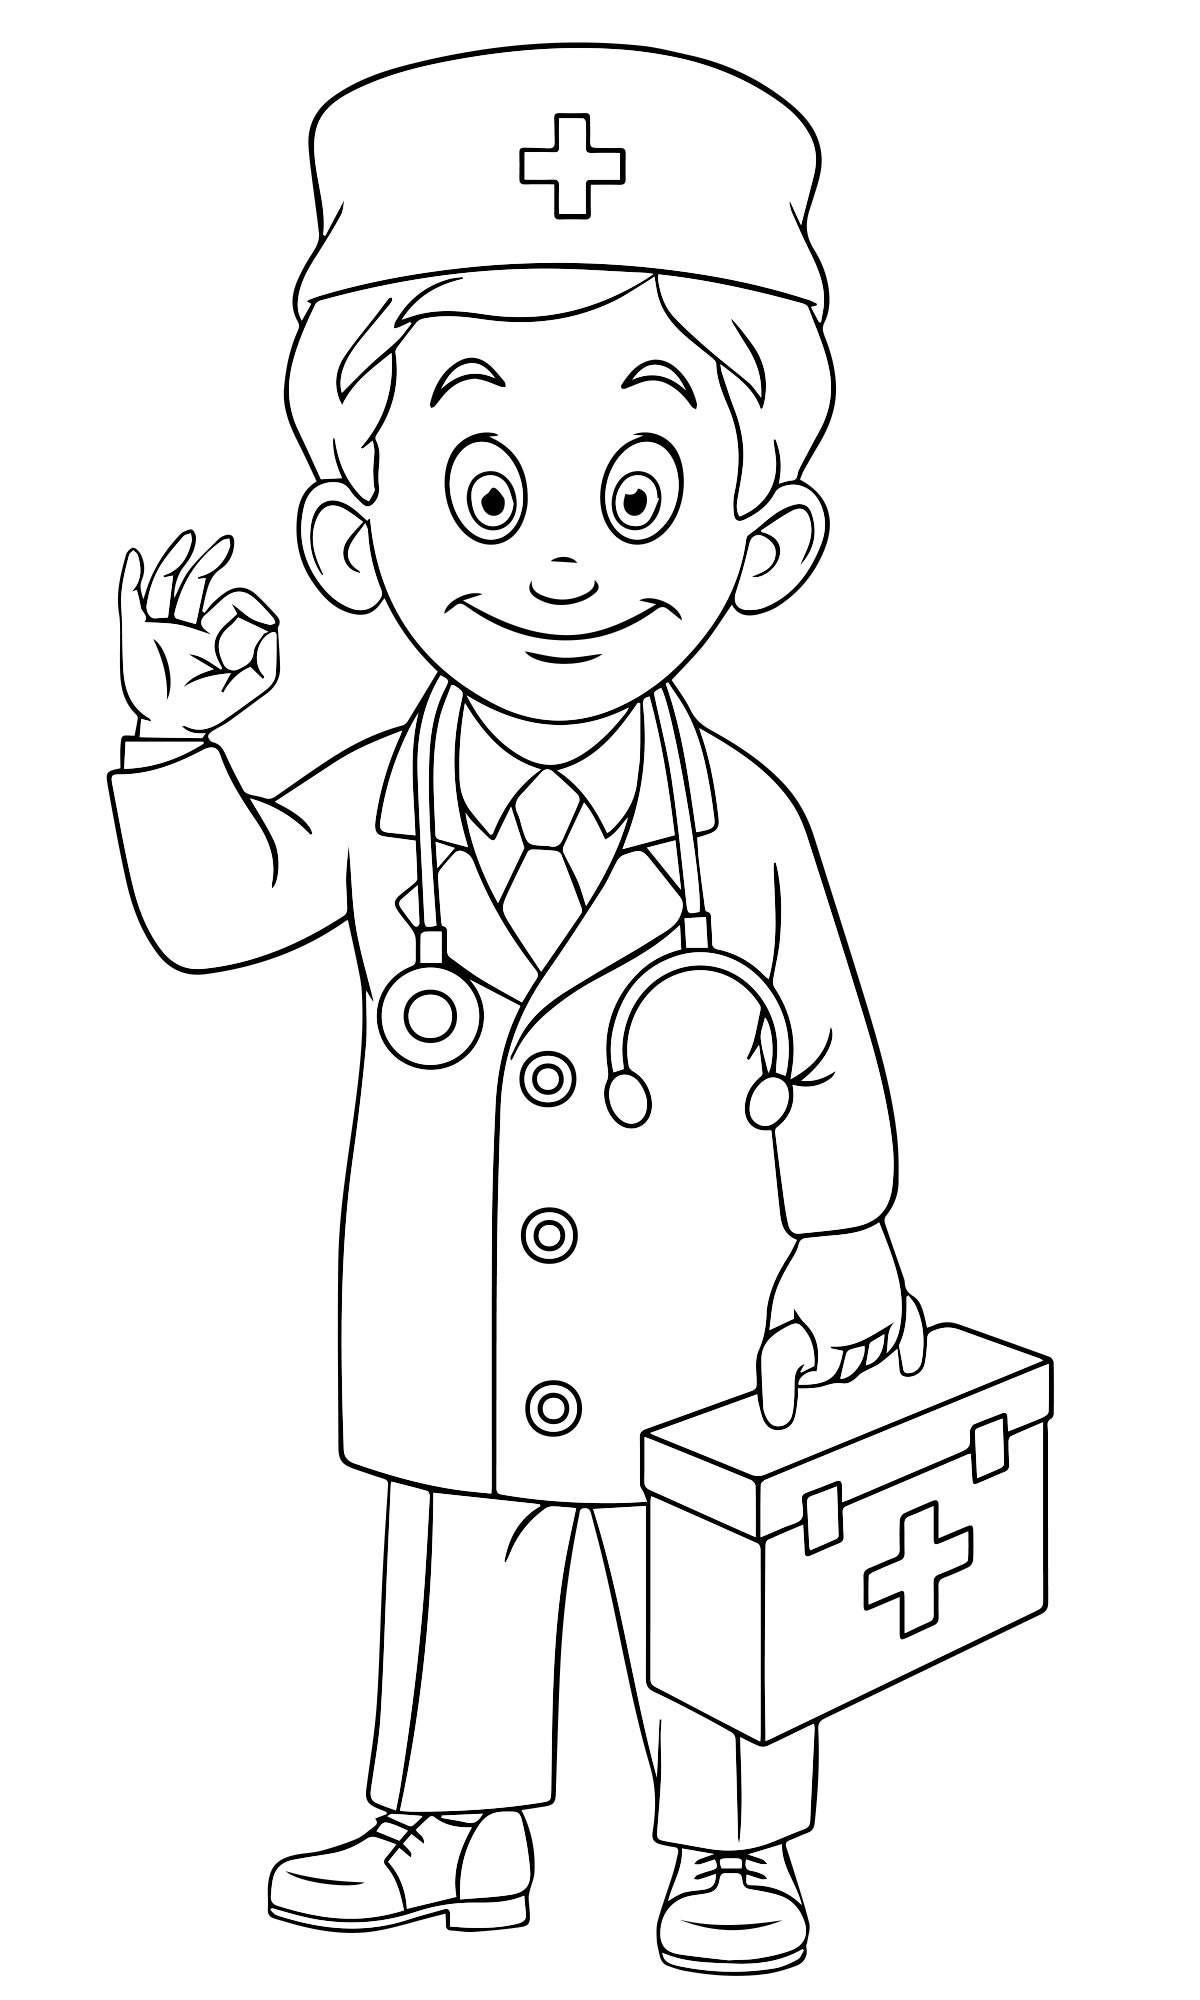 Child doctor #21